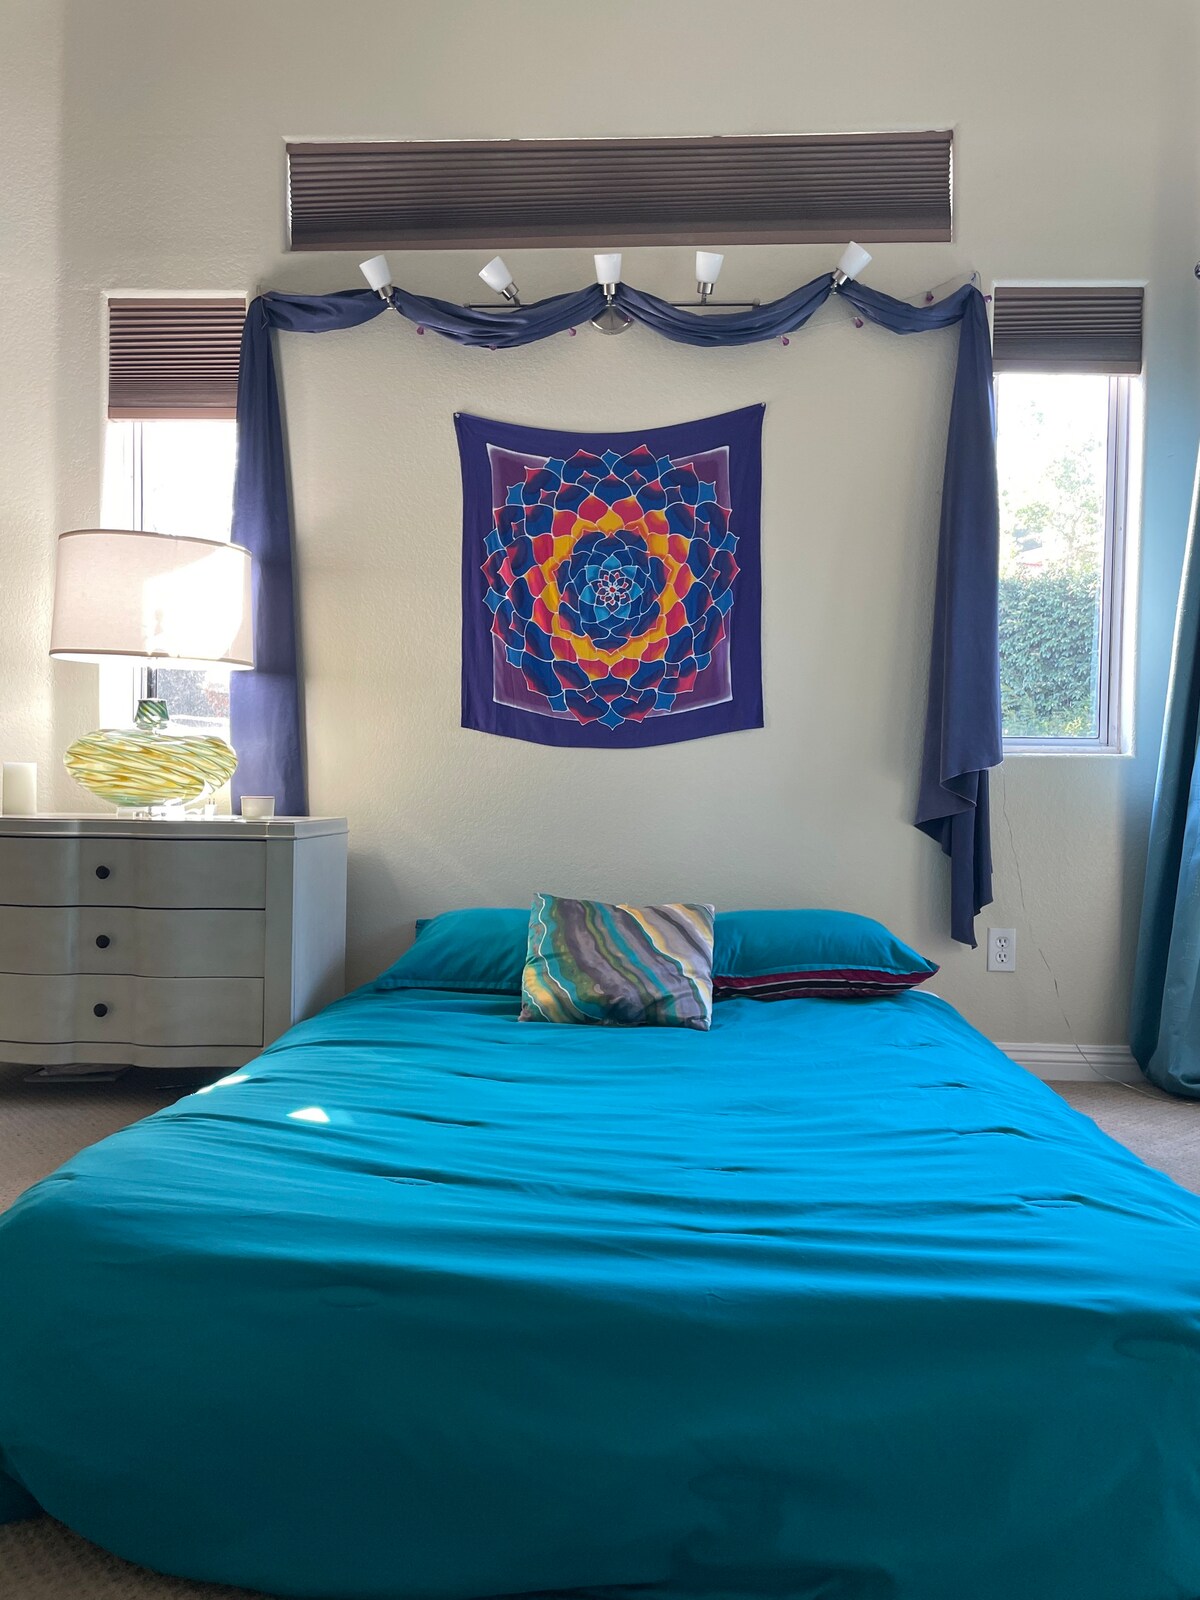 Peaceful private master bedroom in Carlsbad, CA